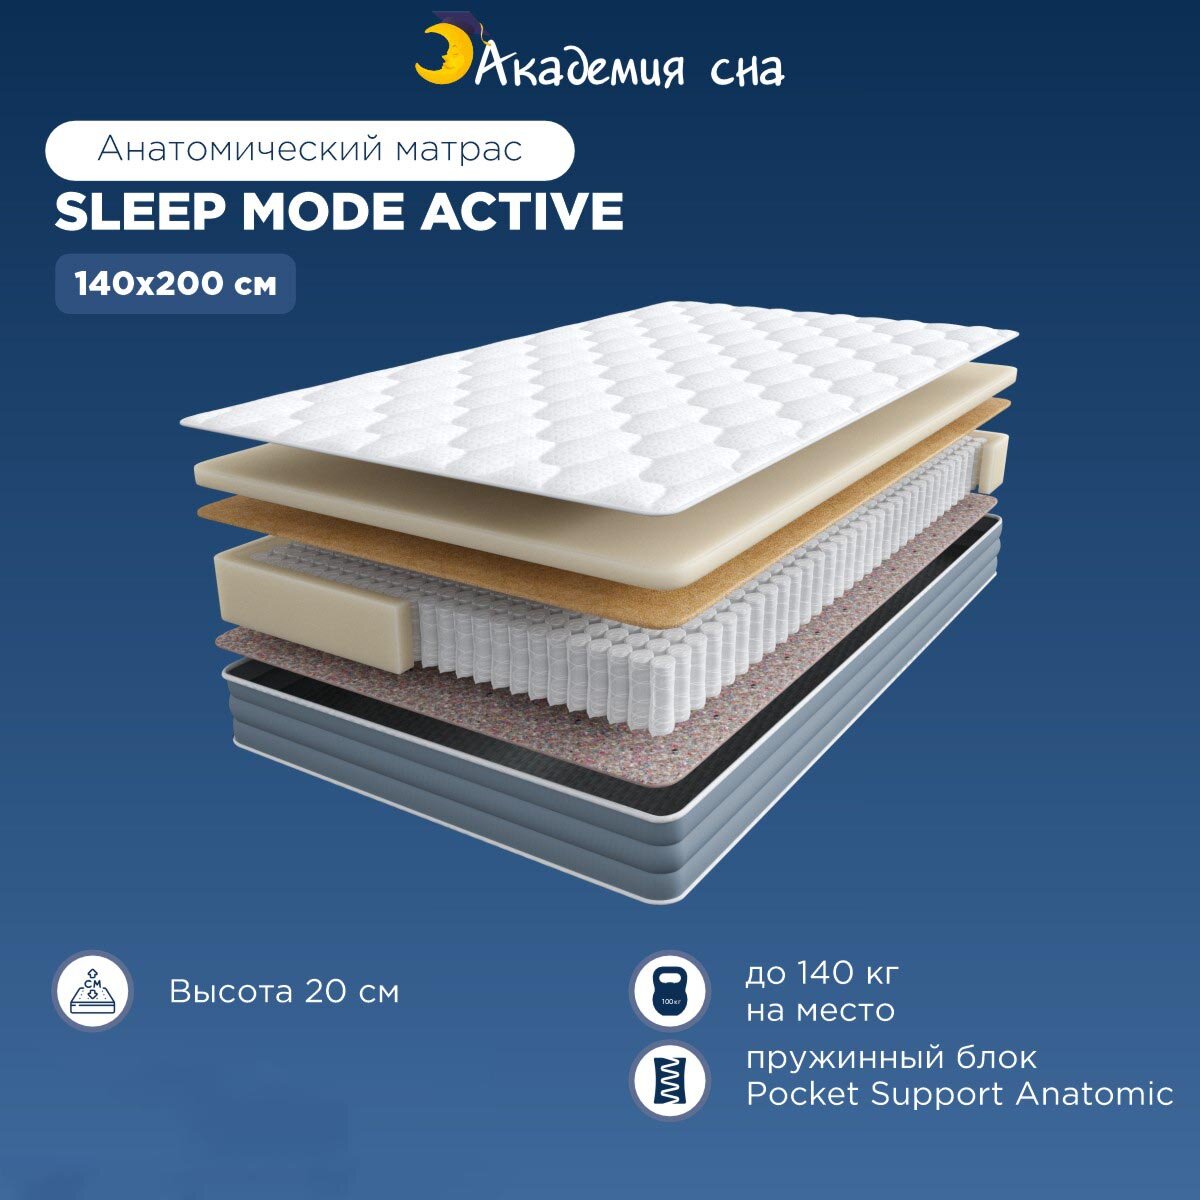 Матрас Академия Сна Sleep Mode ACTIVE 140x200